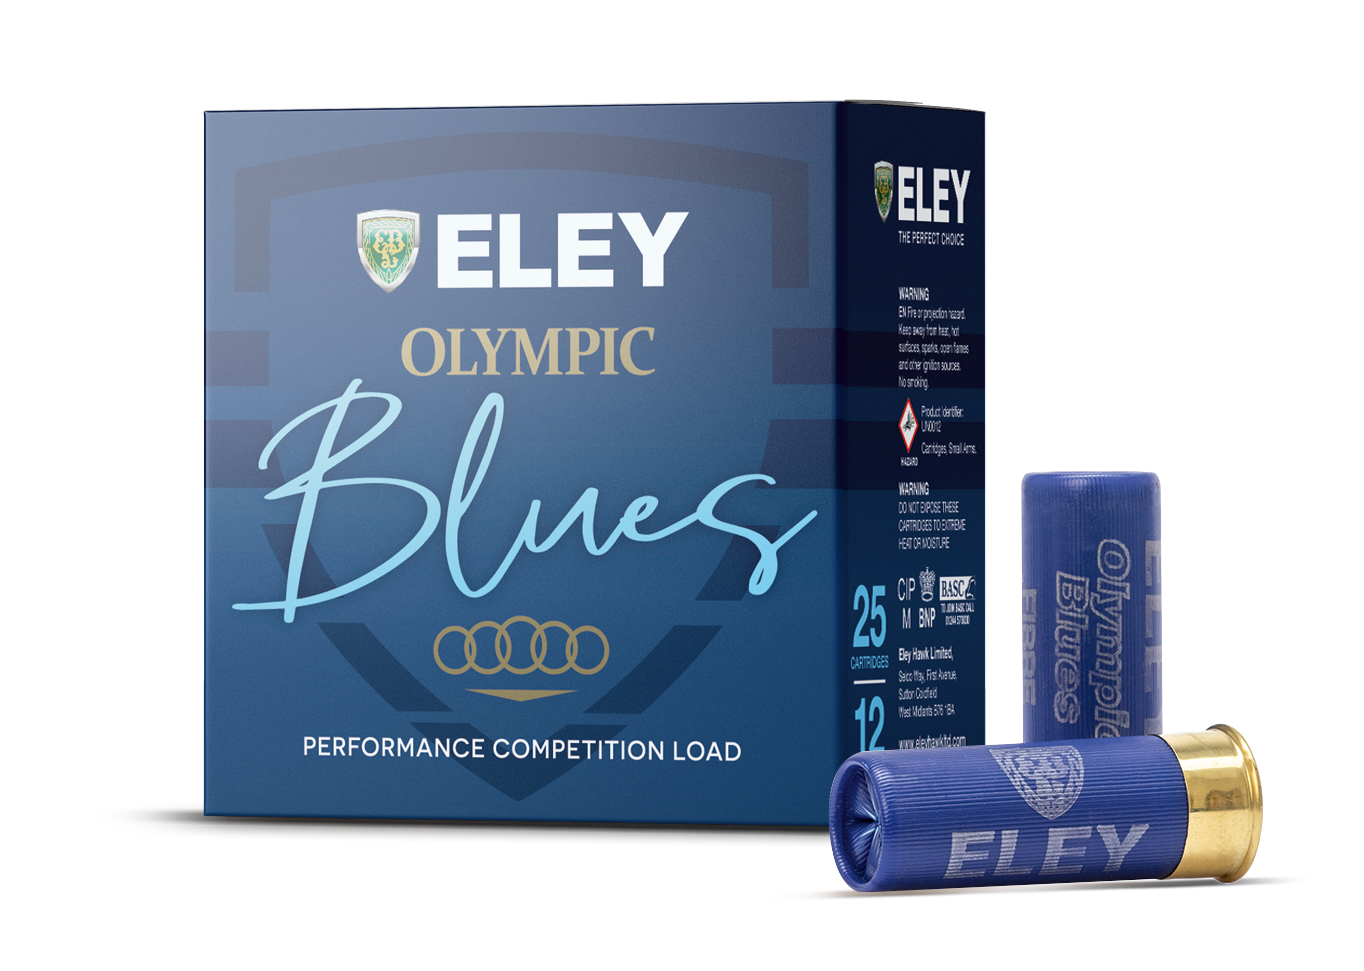 eley-olympic-blues